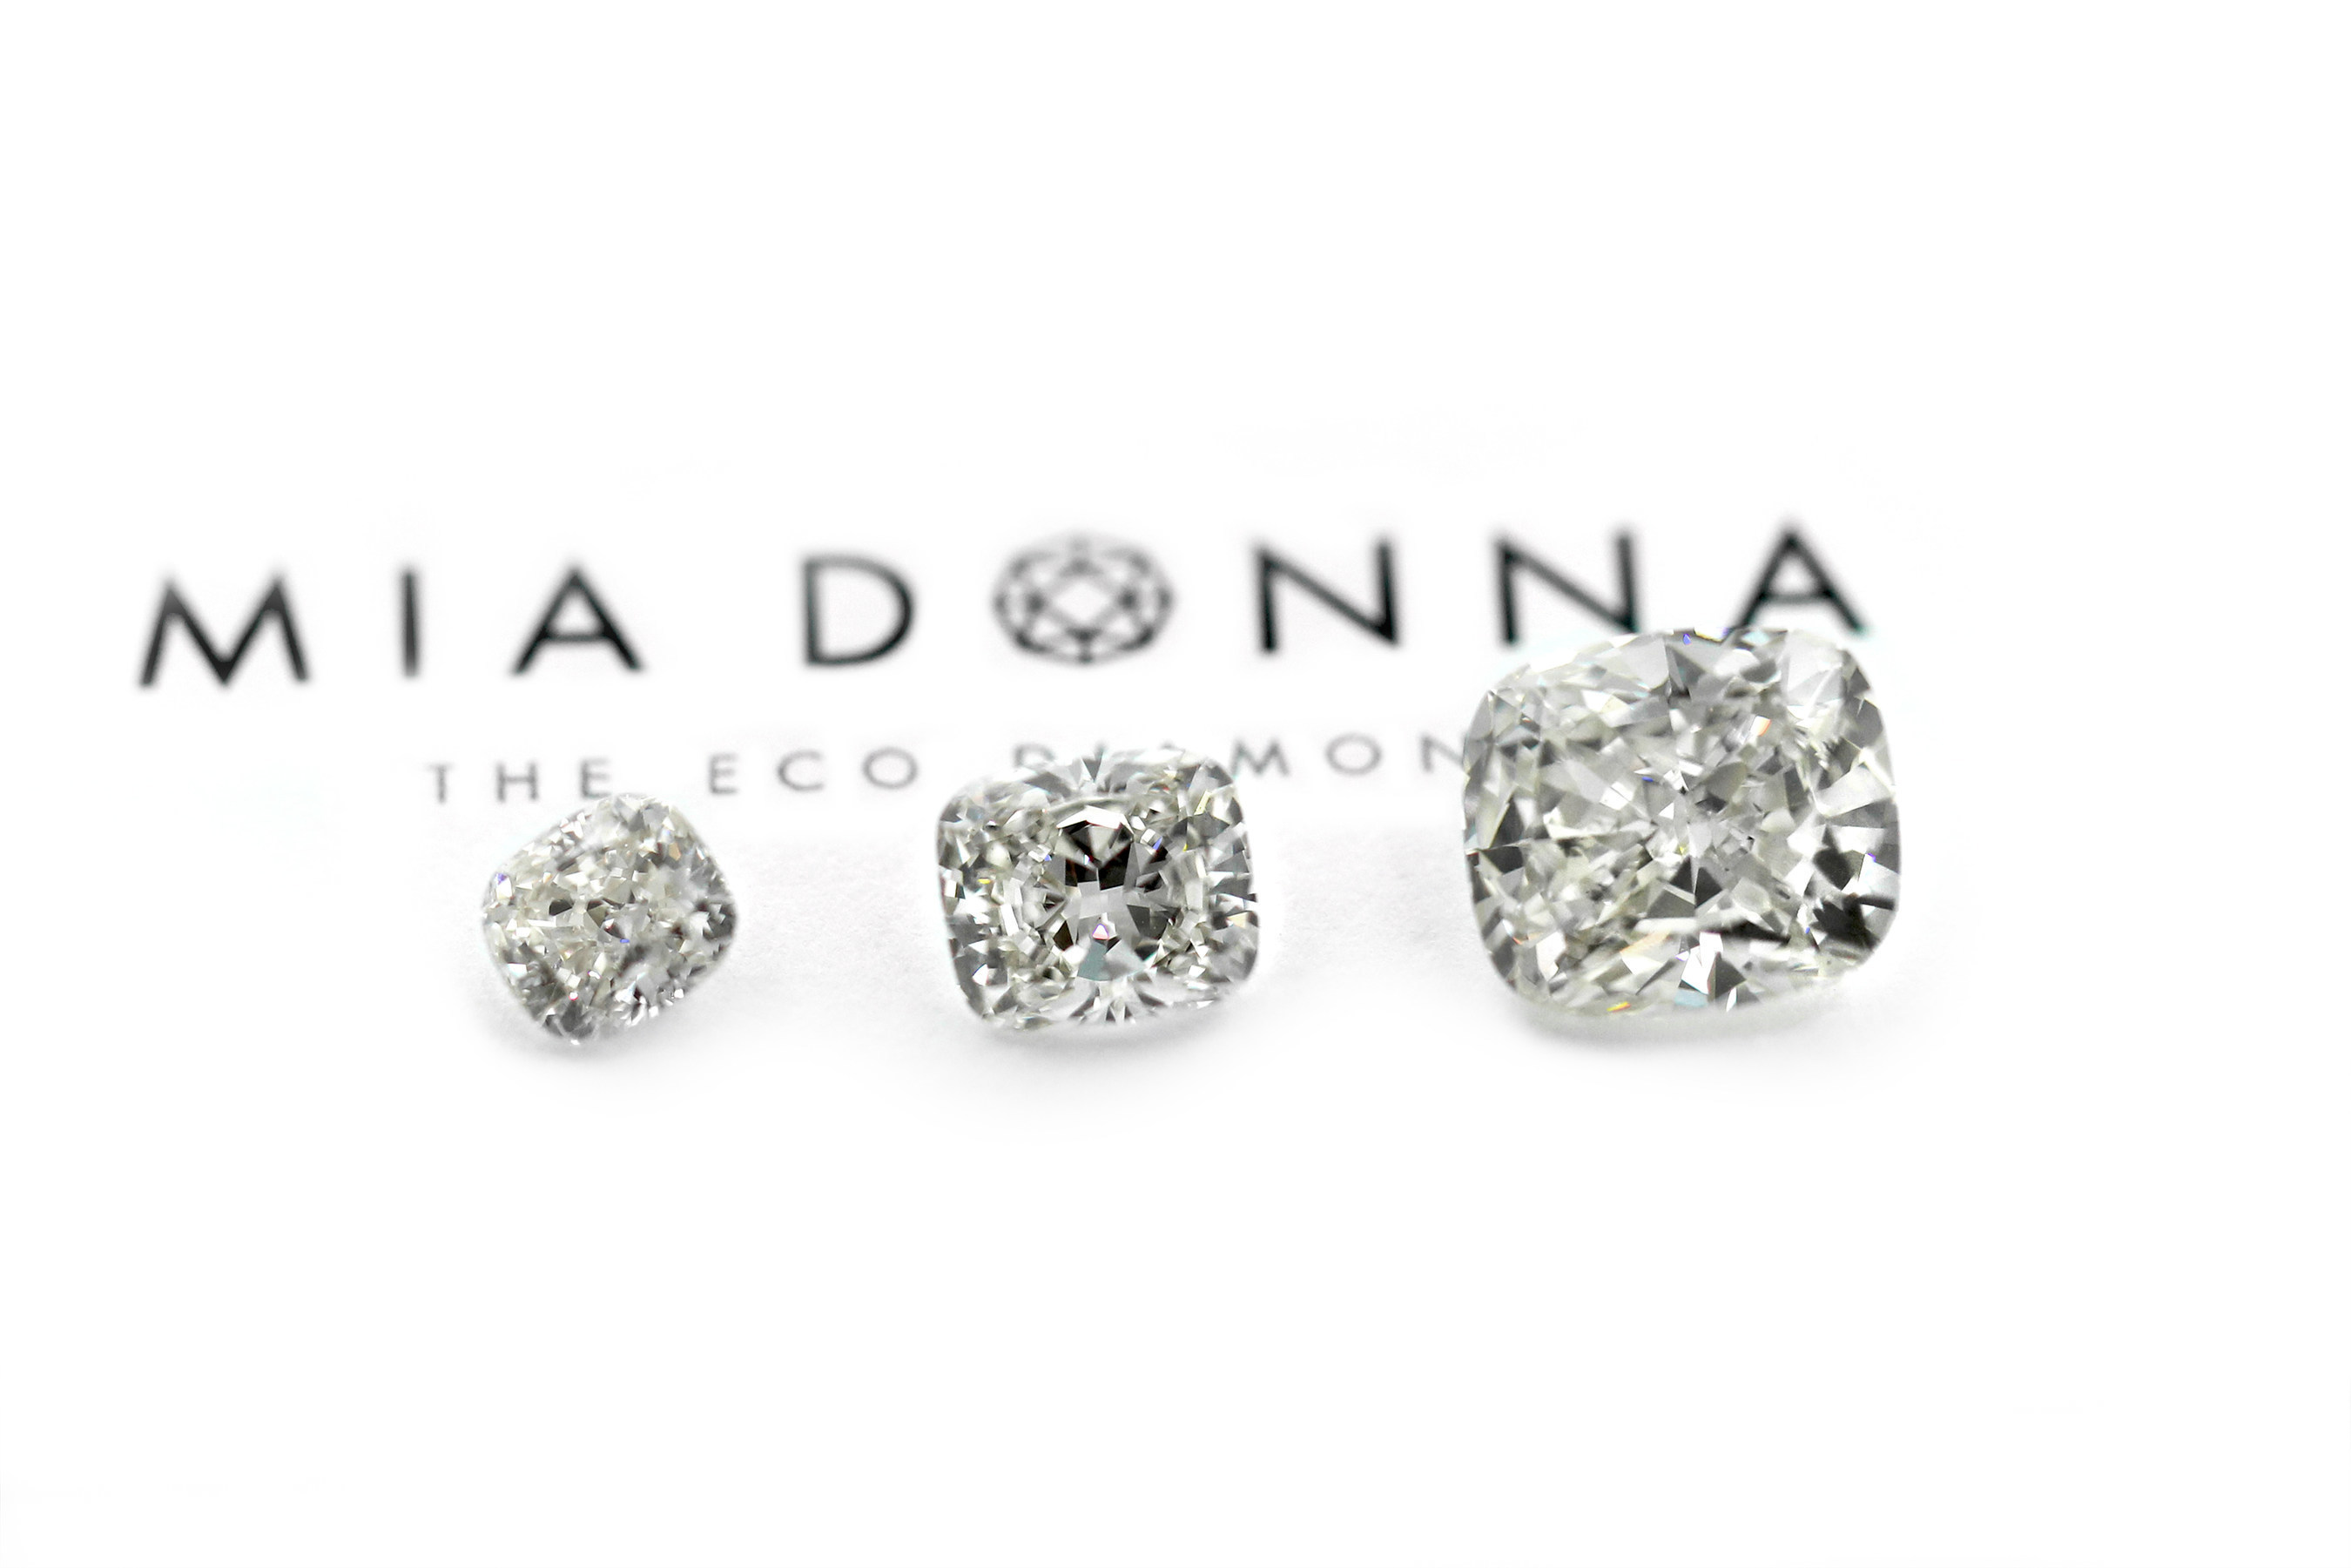 6.28 Carat MiaDonna & Company Largest Grown-in-the-USA Laboratory Diamond, next to 3 carat and 2 carat stones